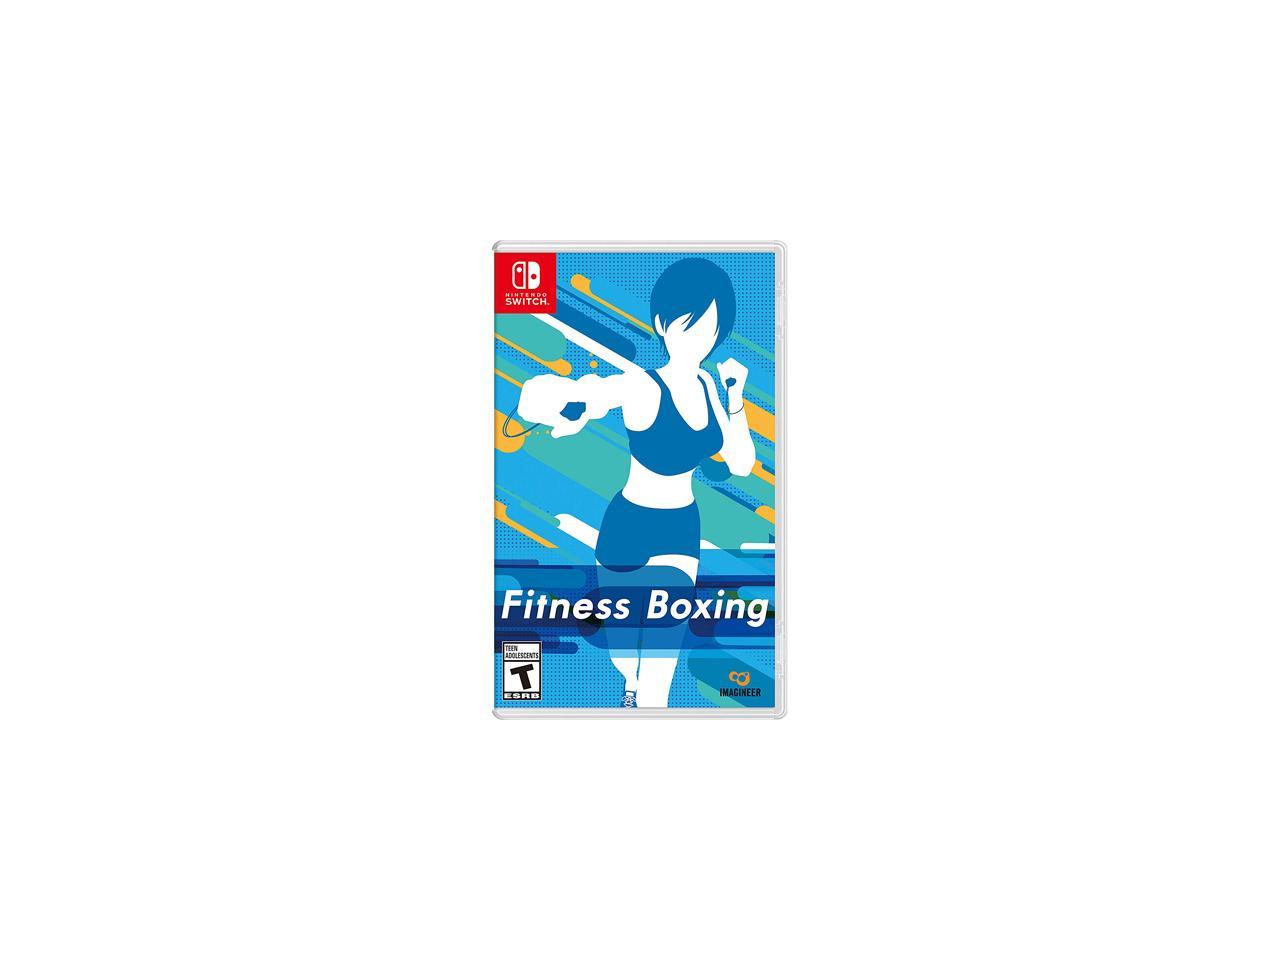 Fitness Boxing Nintendo Switch 45496594367 Ebay 